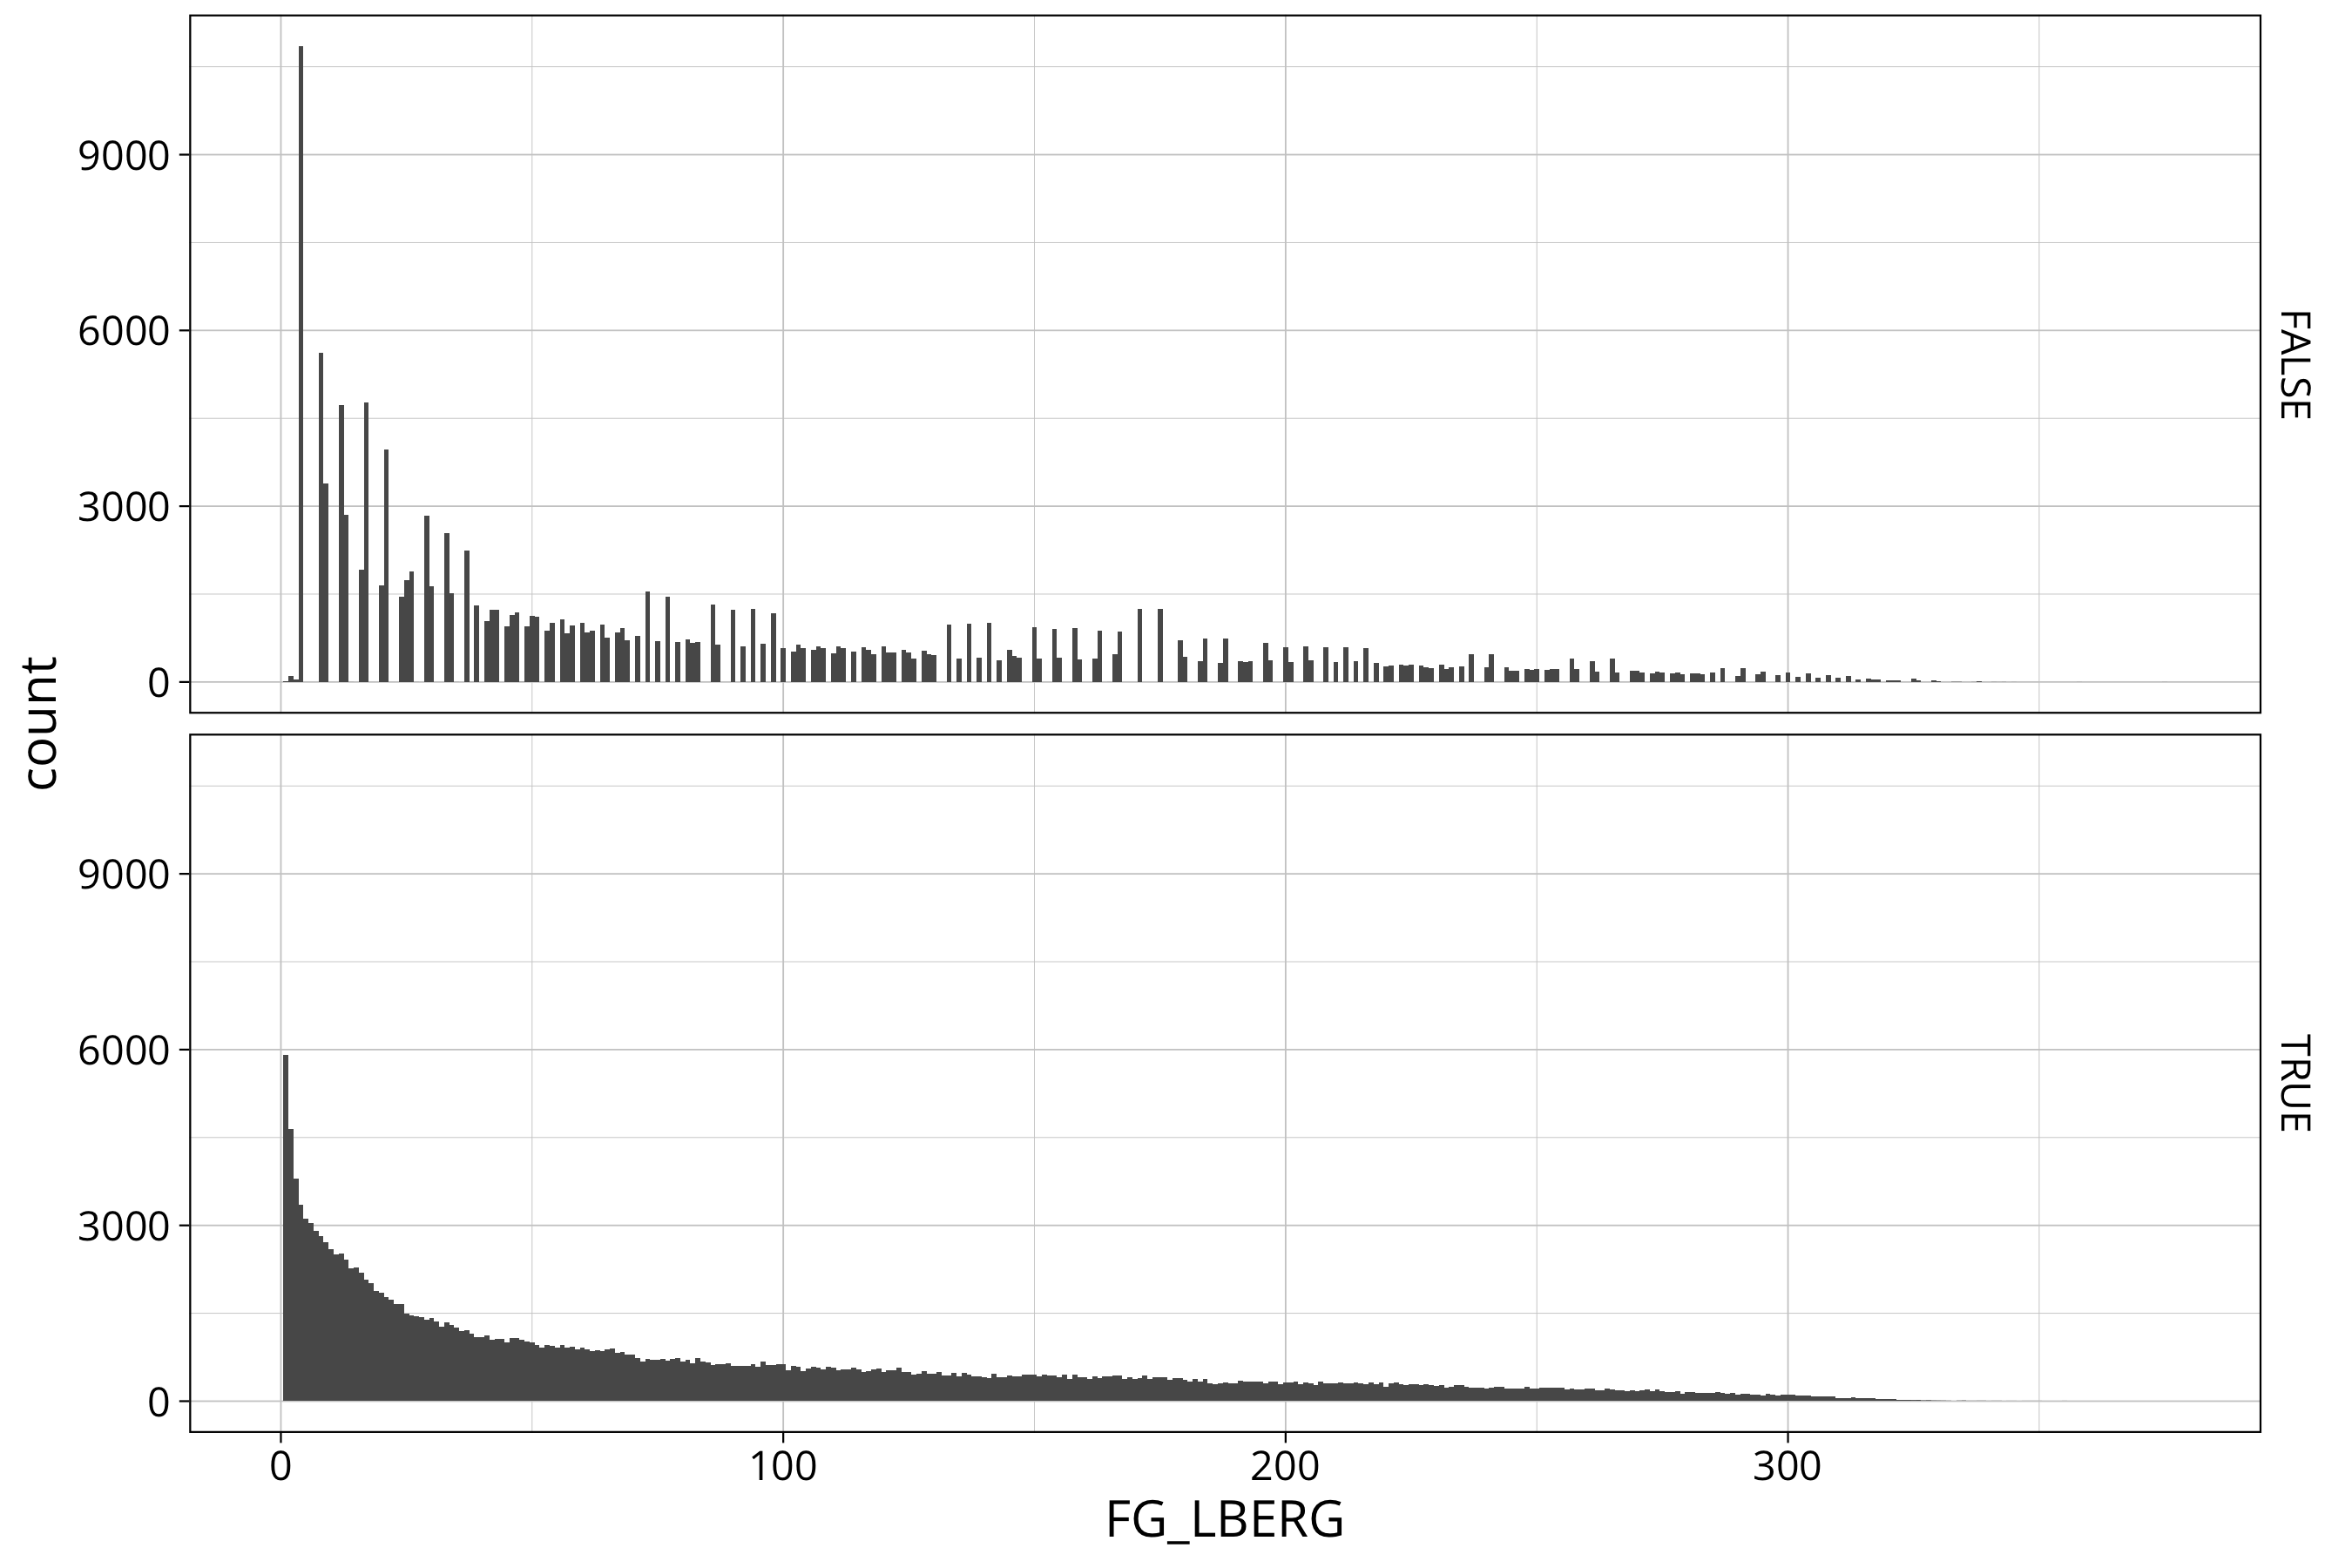 plot of chunk solar: devided histogram